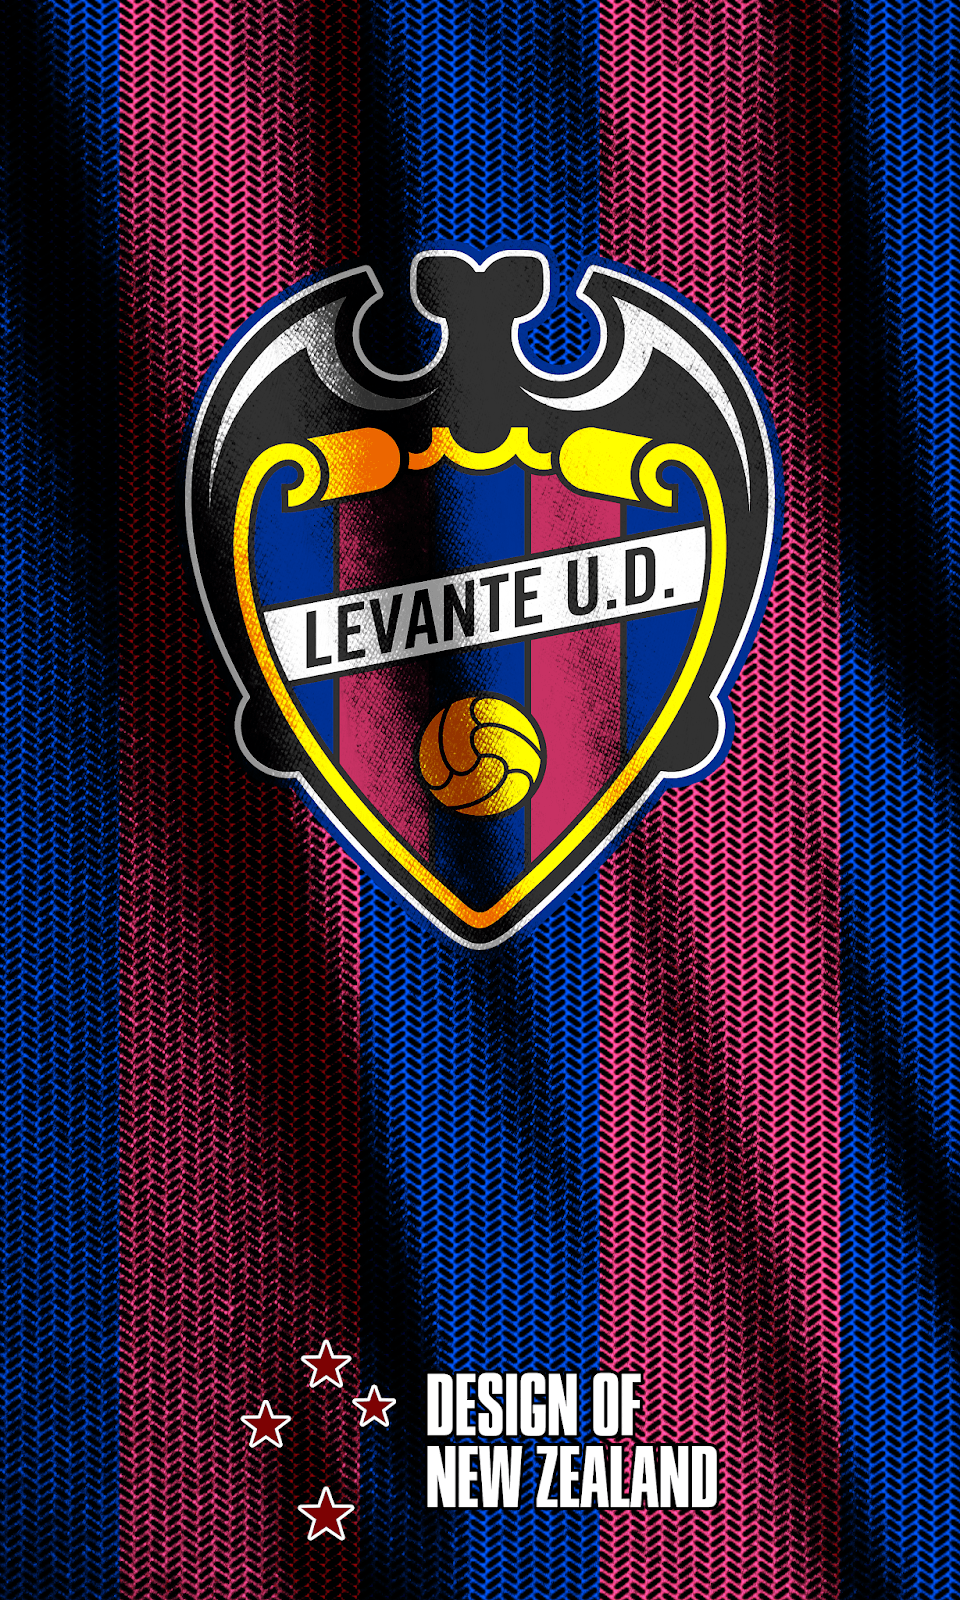 Wallpaper Levante UD. The Football Illustrated, Inc. Football